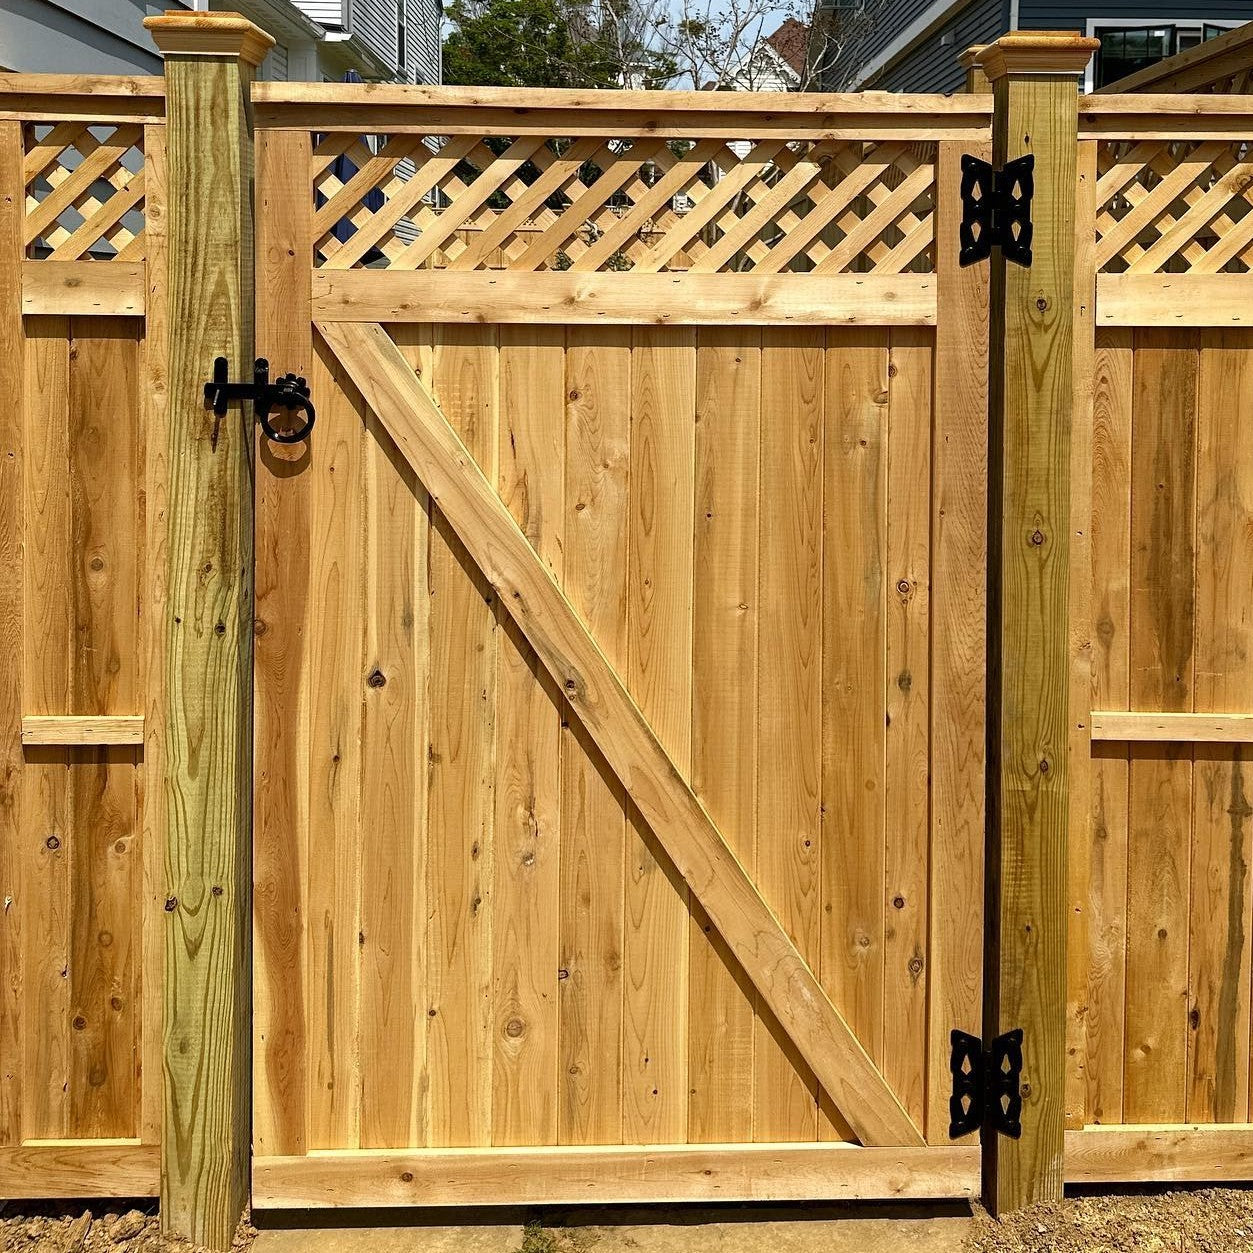 Wood fence gate